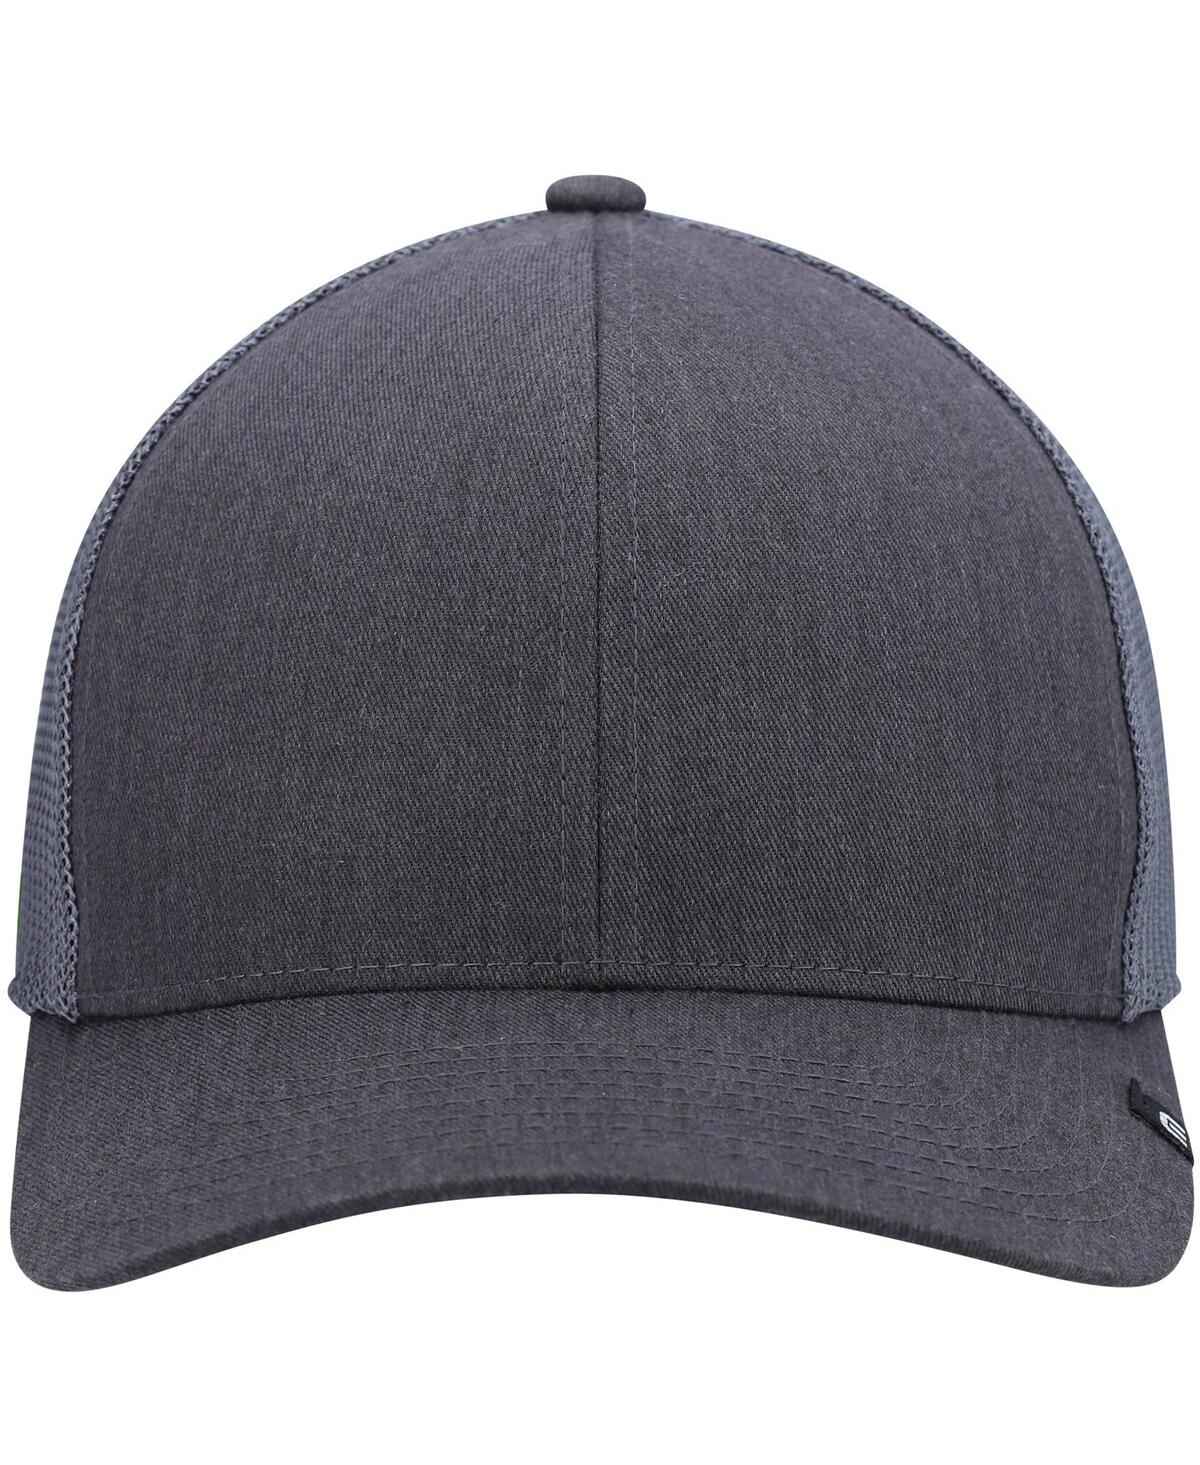 Shop Travis Mathew Men's Travismathew Heathered Charcoal Widder 2.0 Trucker Snapback Hat